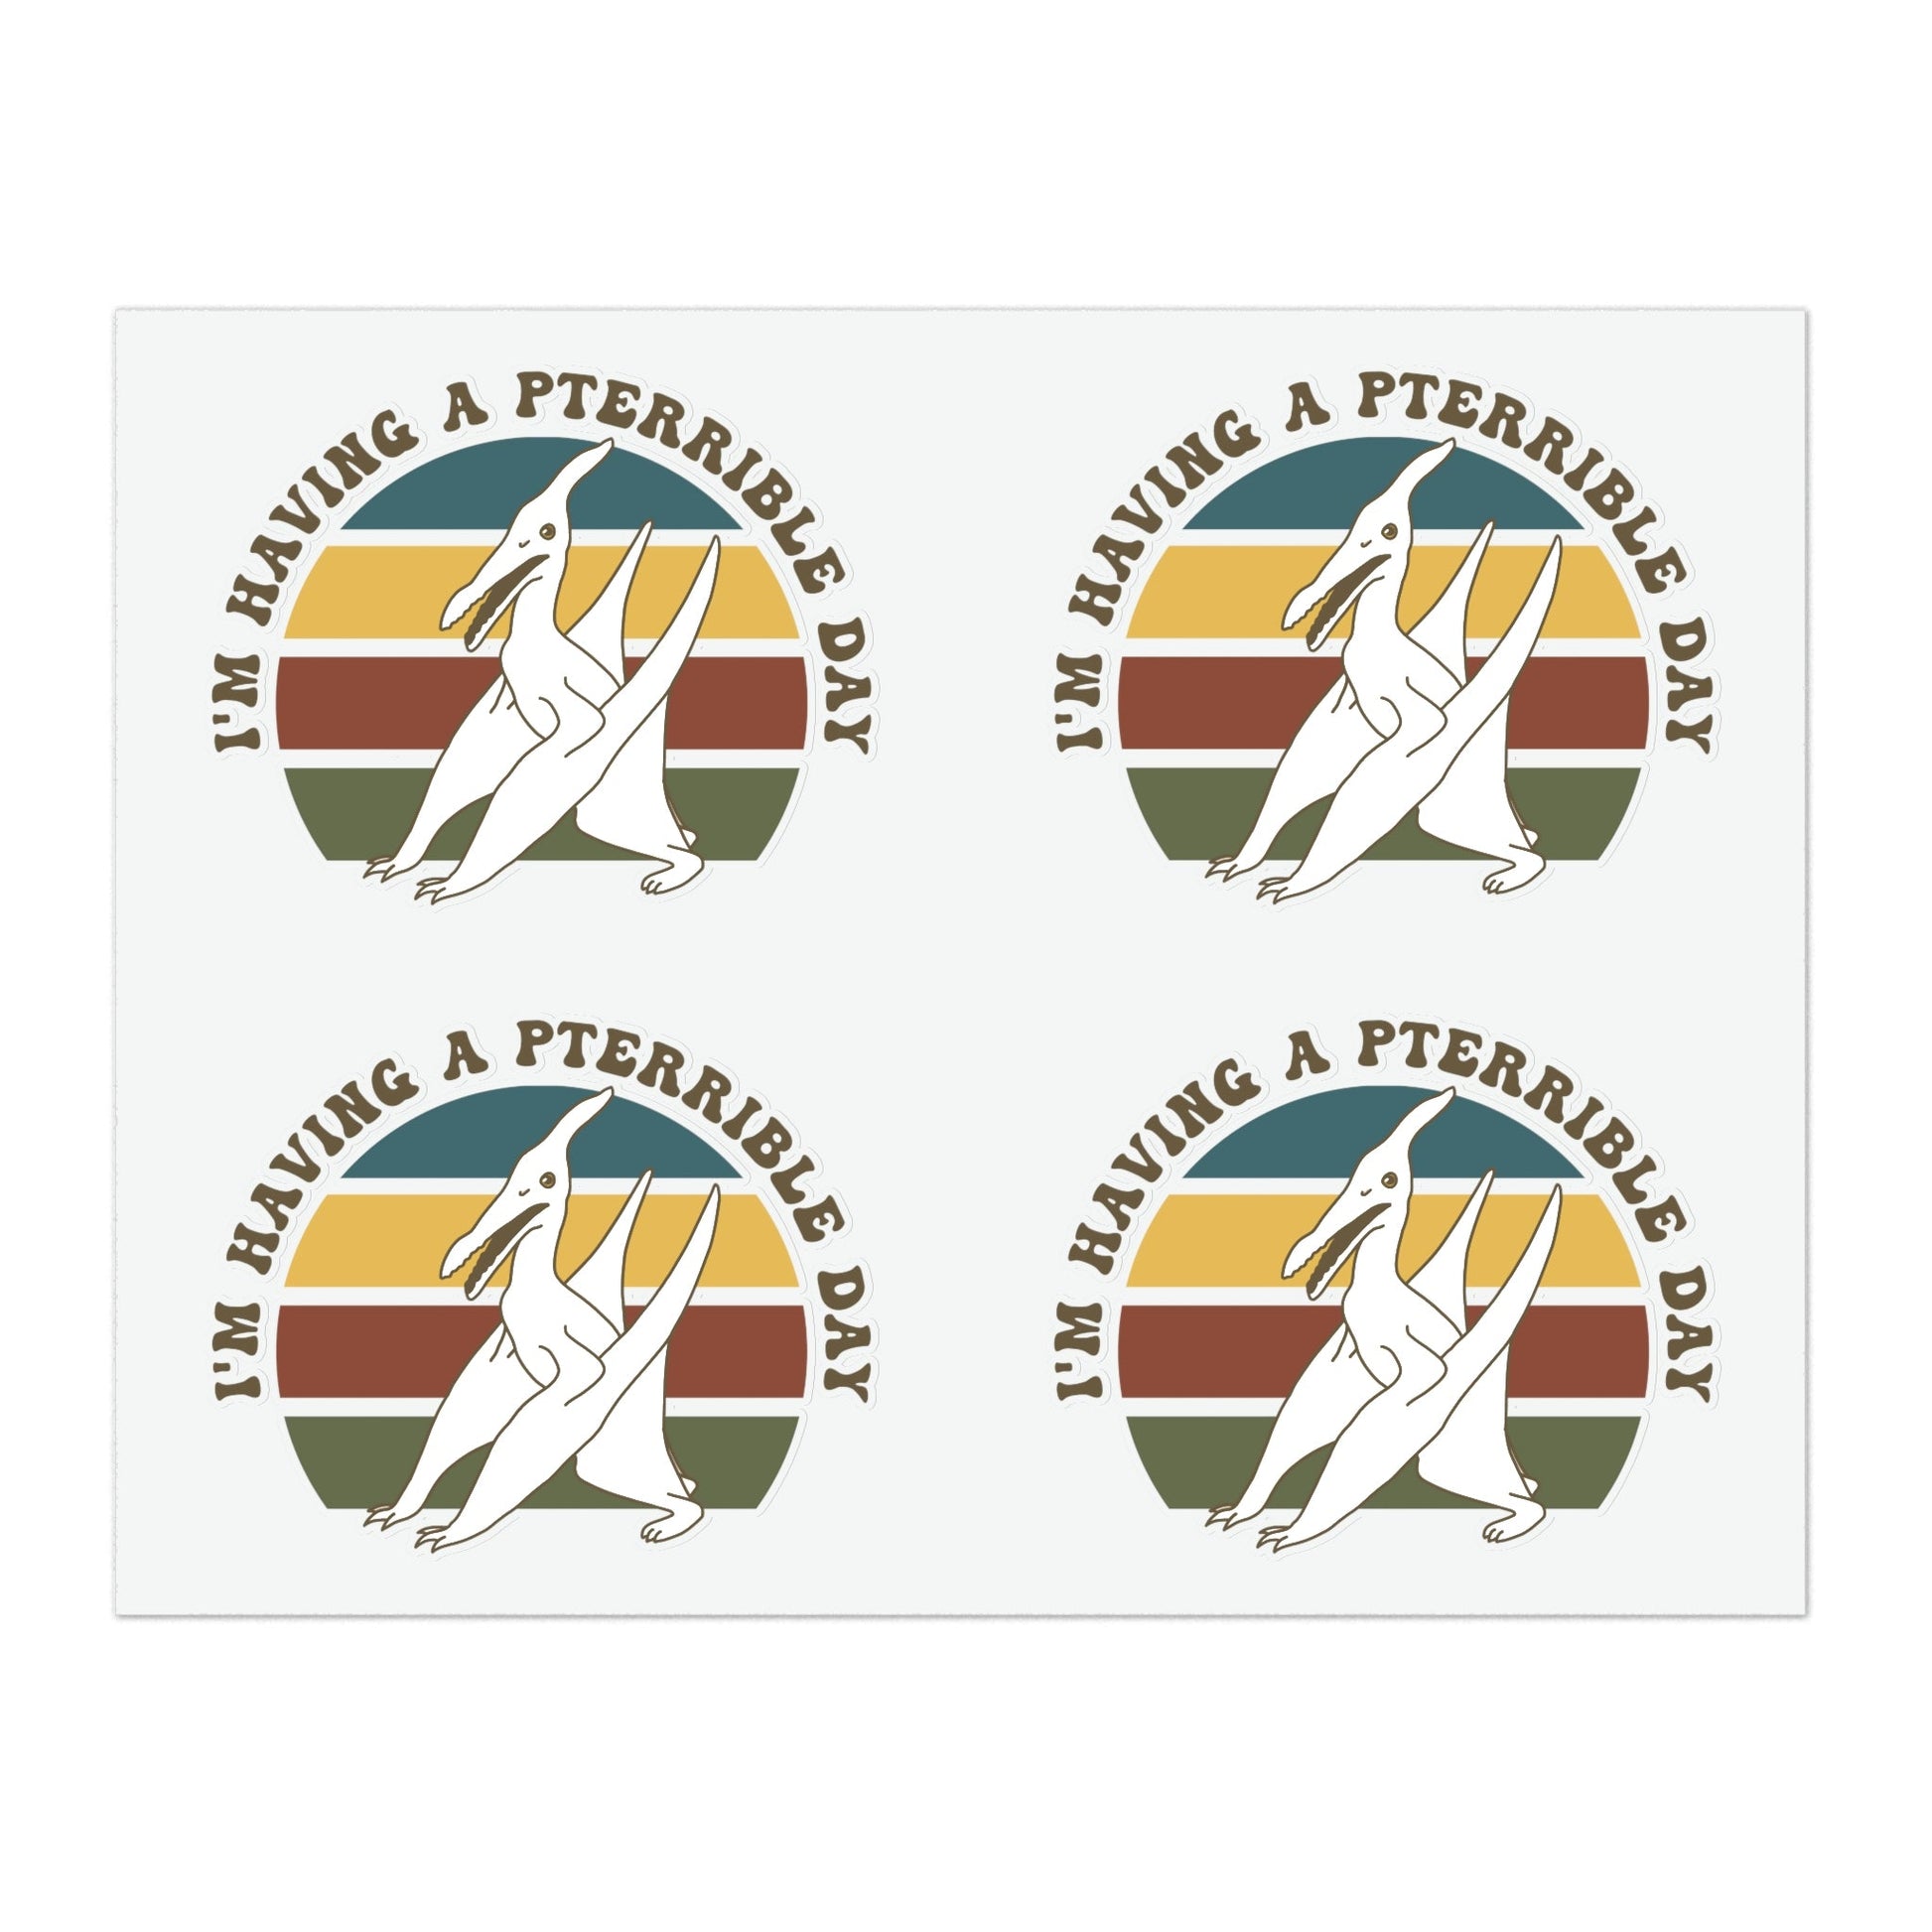 I'm Having A Pterrible Day | Sticker Sheets - Detezi Designs-15938169922617669793